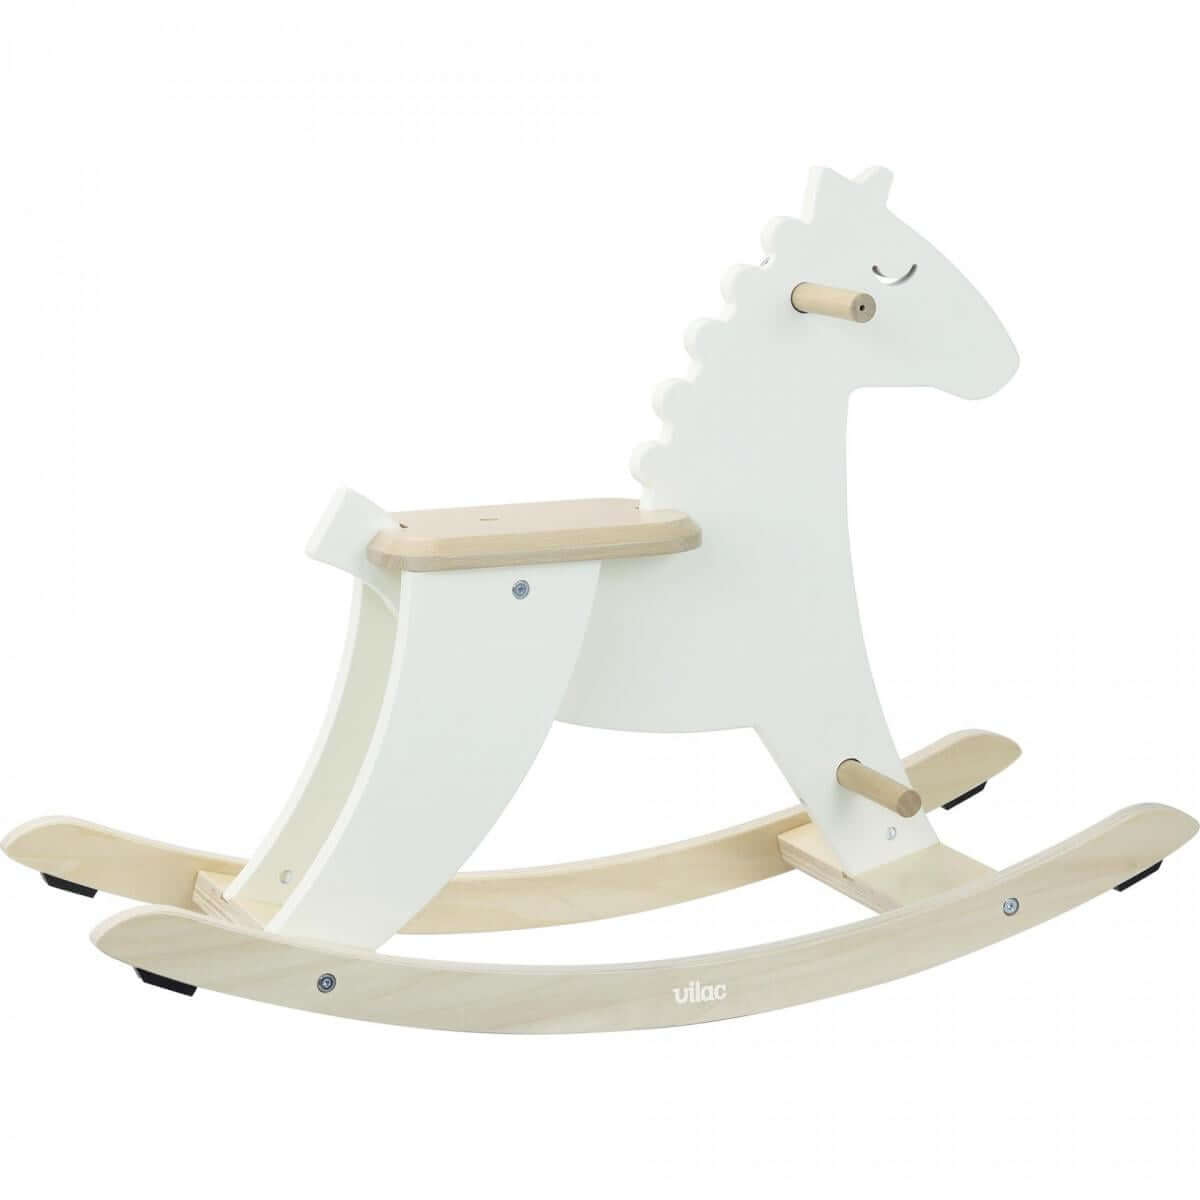 Vilac Hudada Rocking Horse (White)